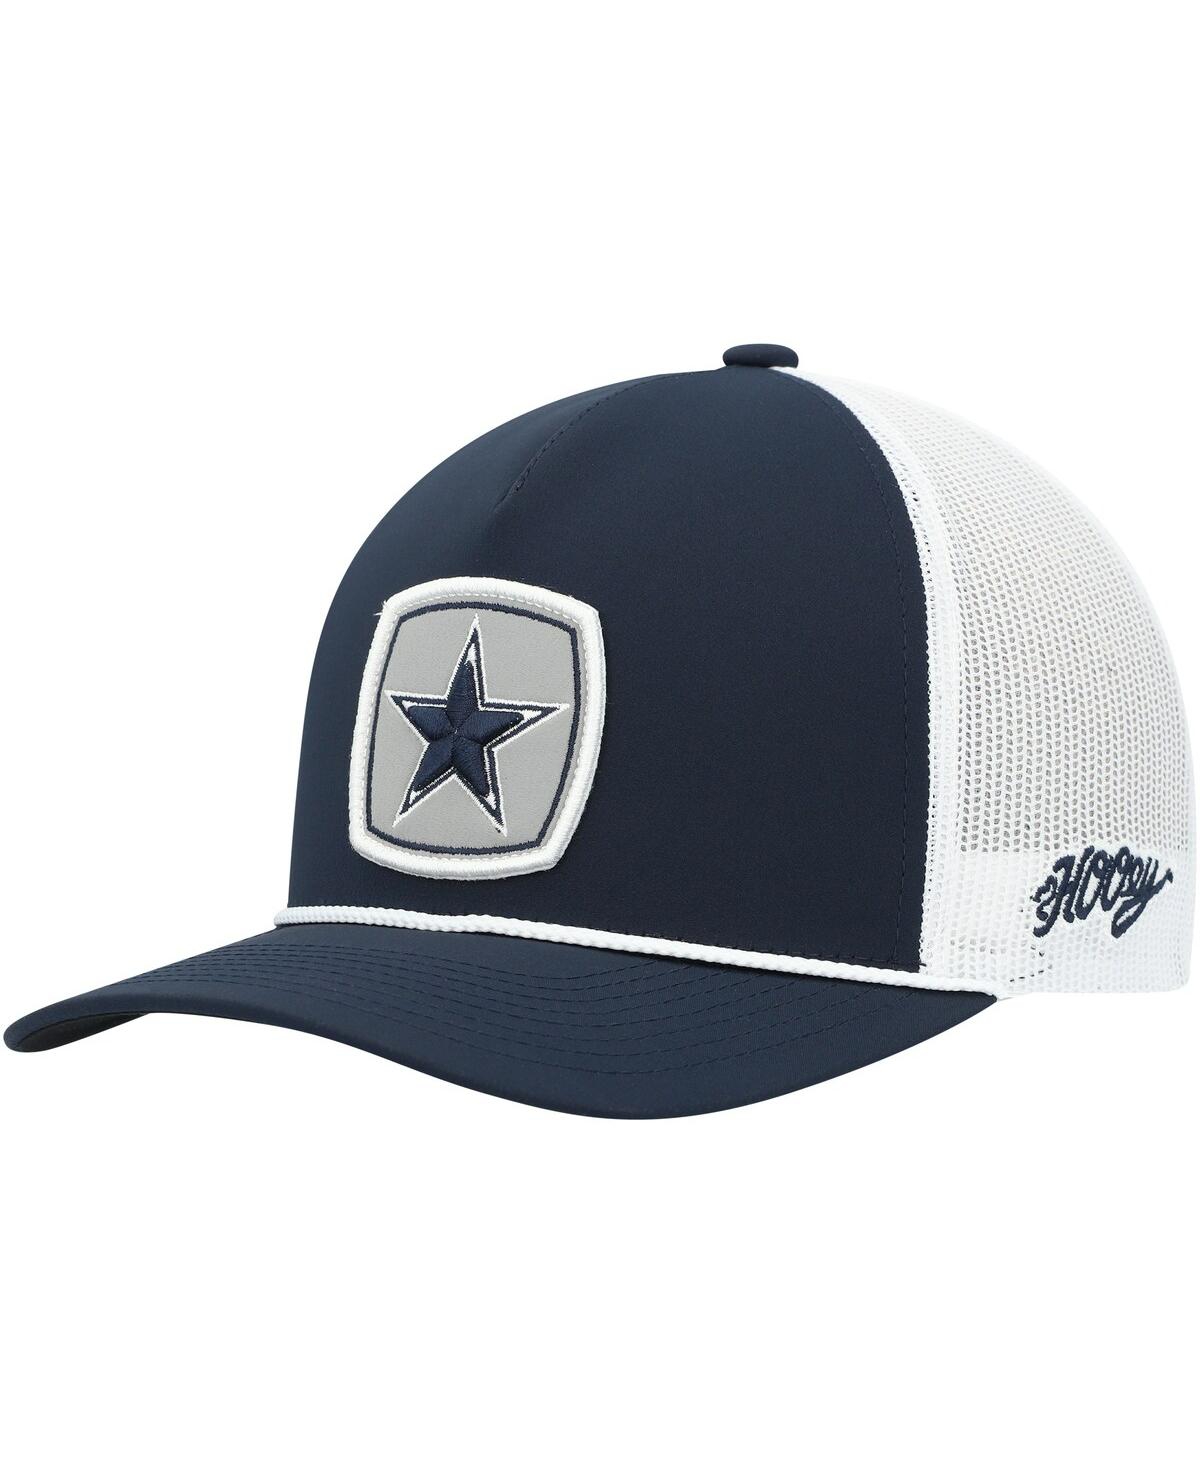 Men's Hooey Navy, White Dallas Cowboys Star Patch Rope Trucker Snapback Hat - Navy, White